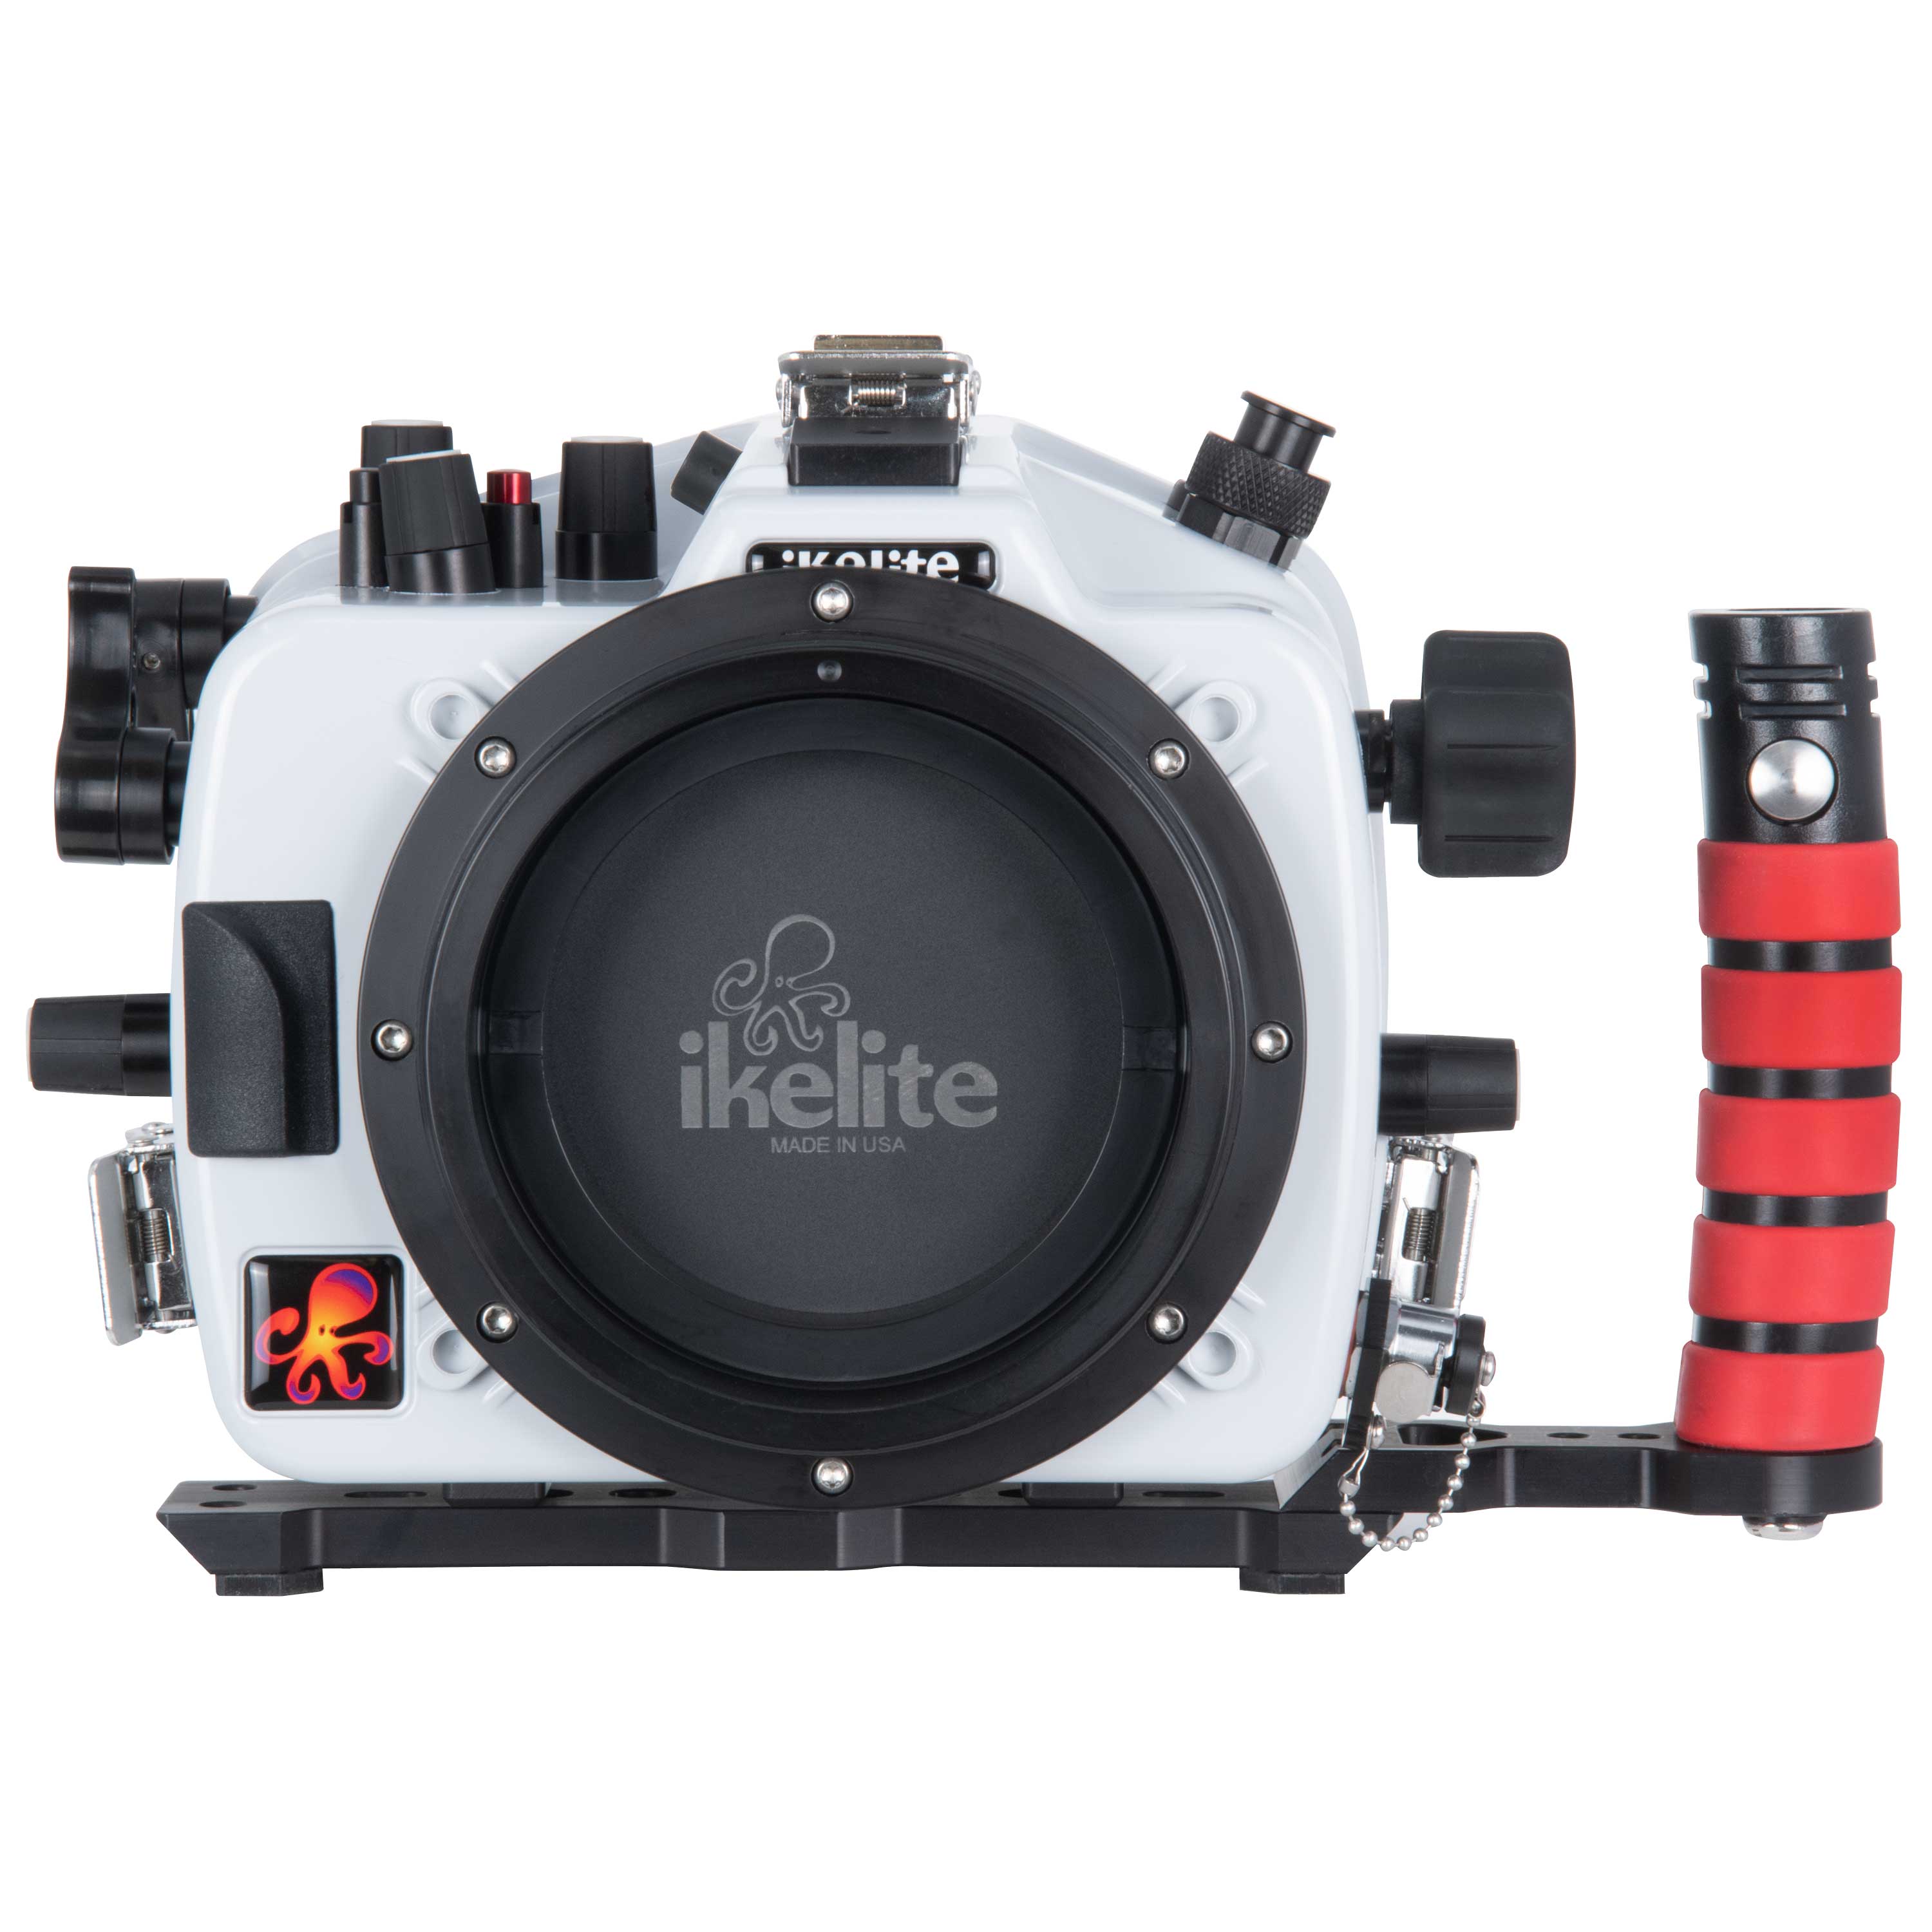 Ikelite Ultra Compact Housing for Nikon Coolpix s6000デジタルカメラ( 未使用の新古品)  激安販売品